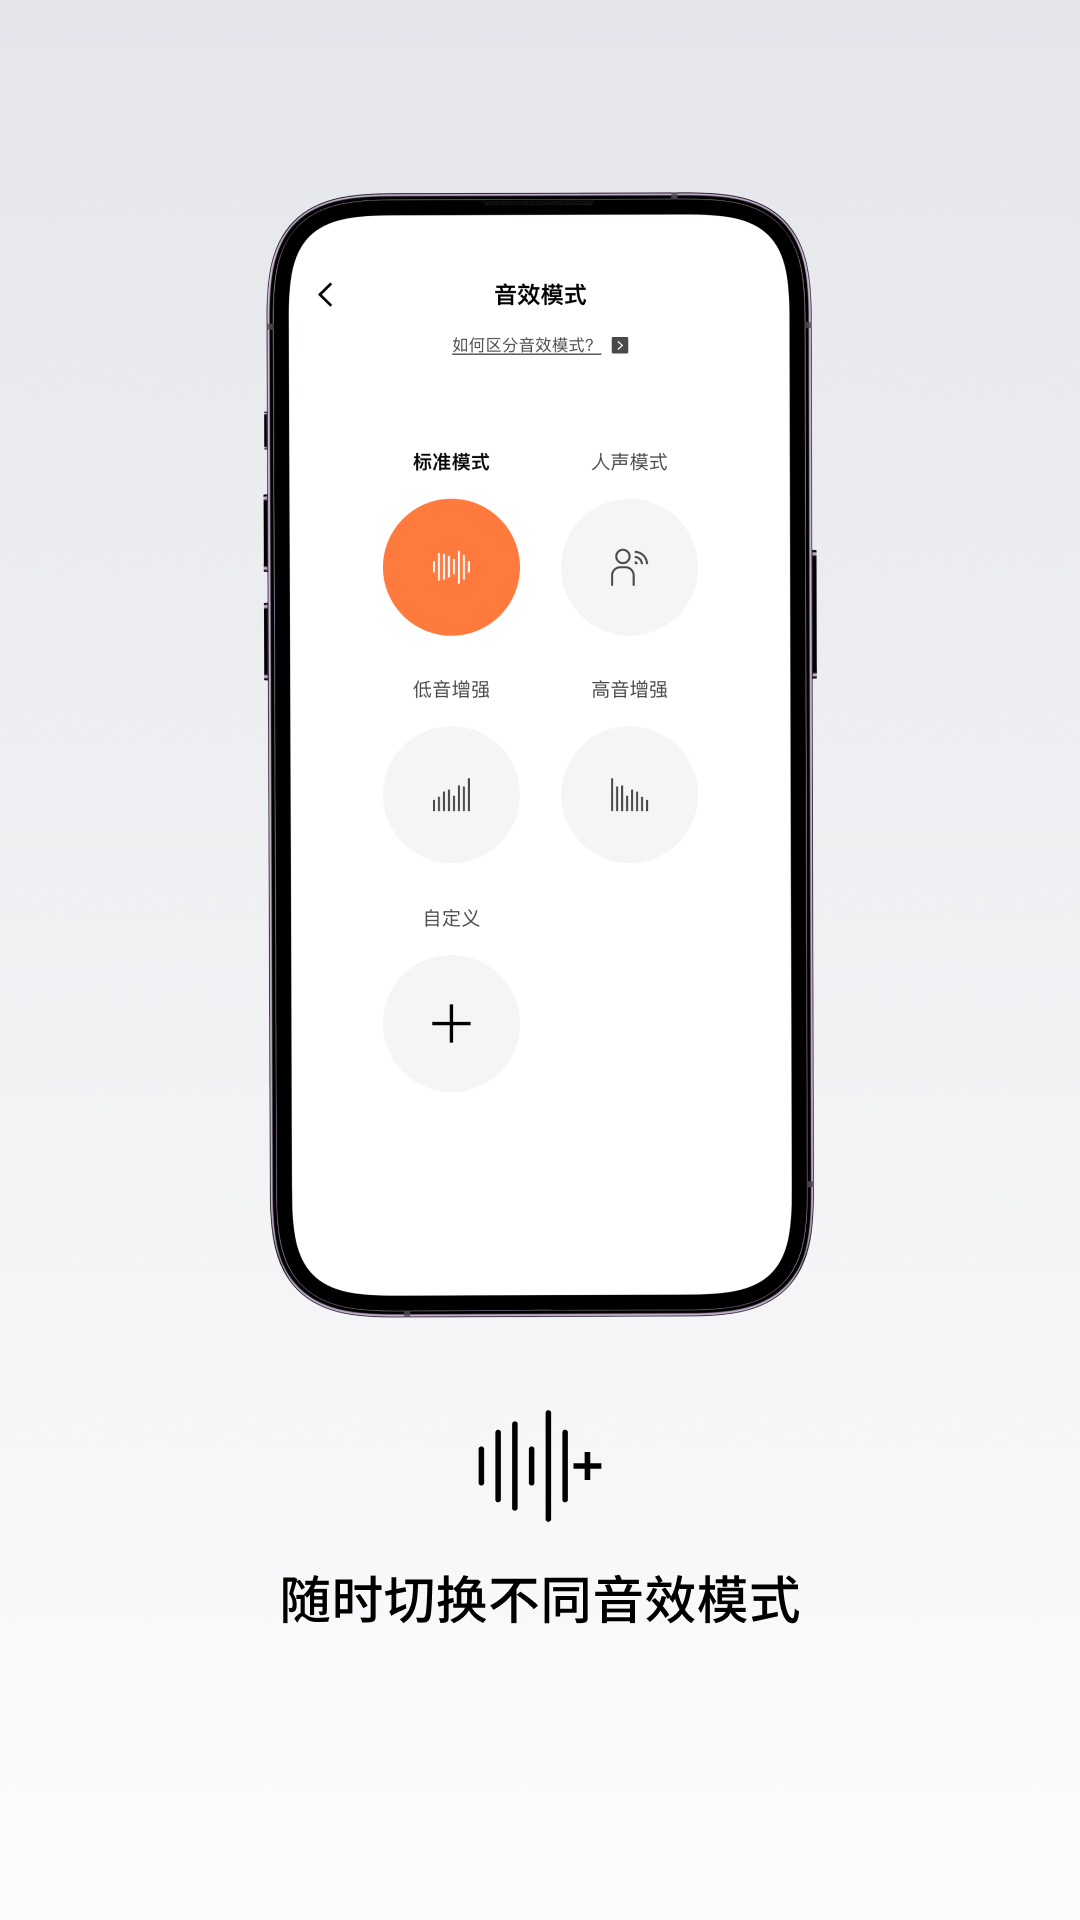 Shokz-韶音v4.0.2-帮您快速上手使用韶音耳机截图3